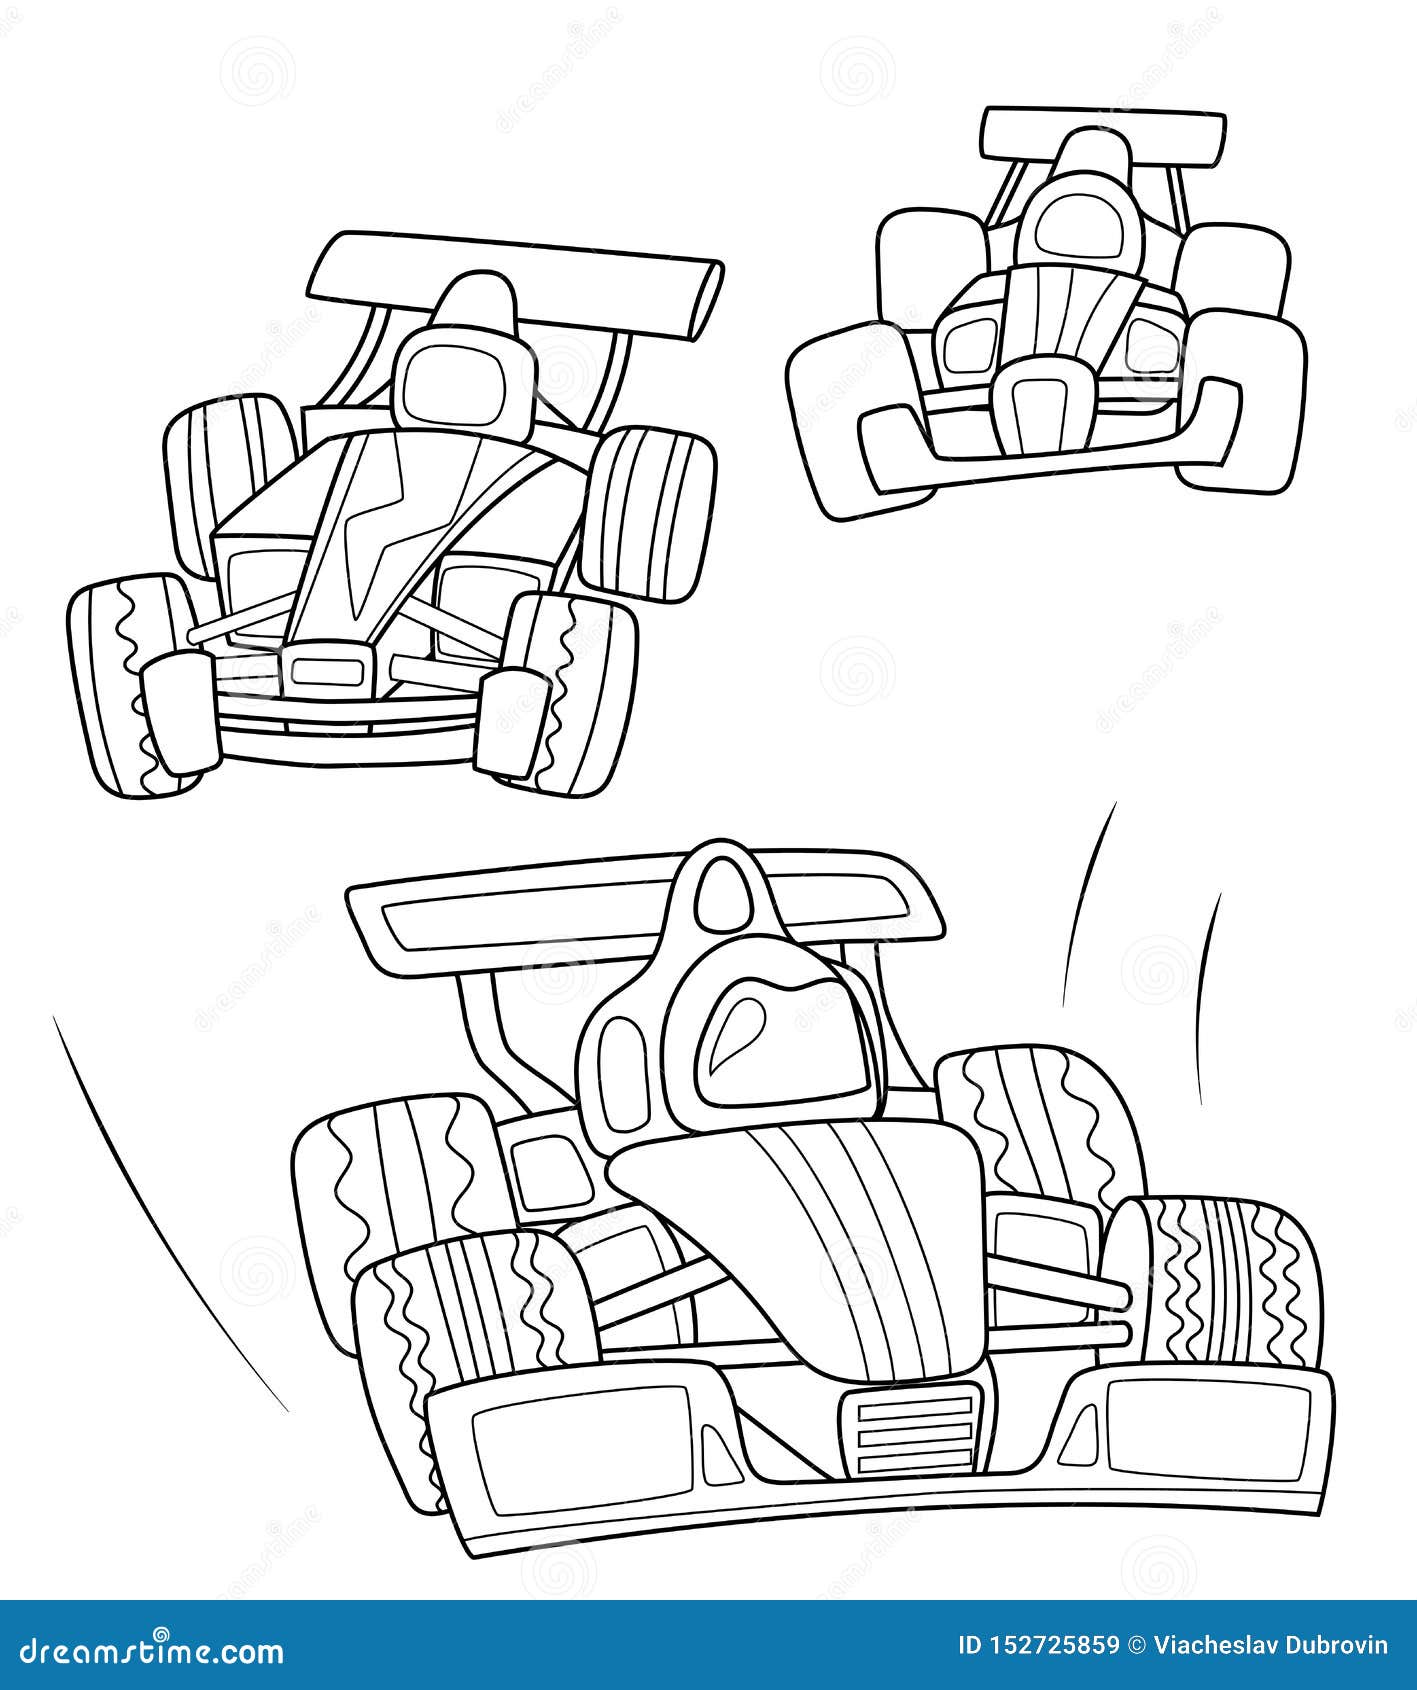 race car coloring pages